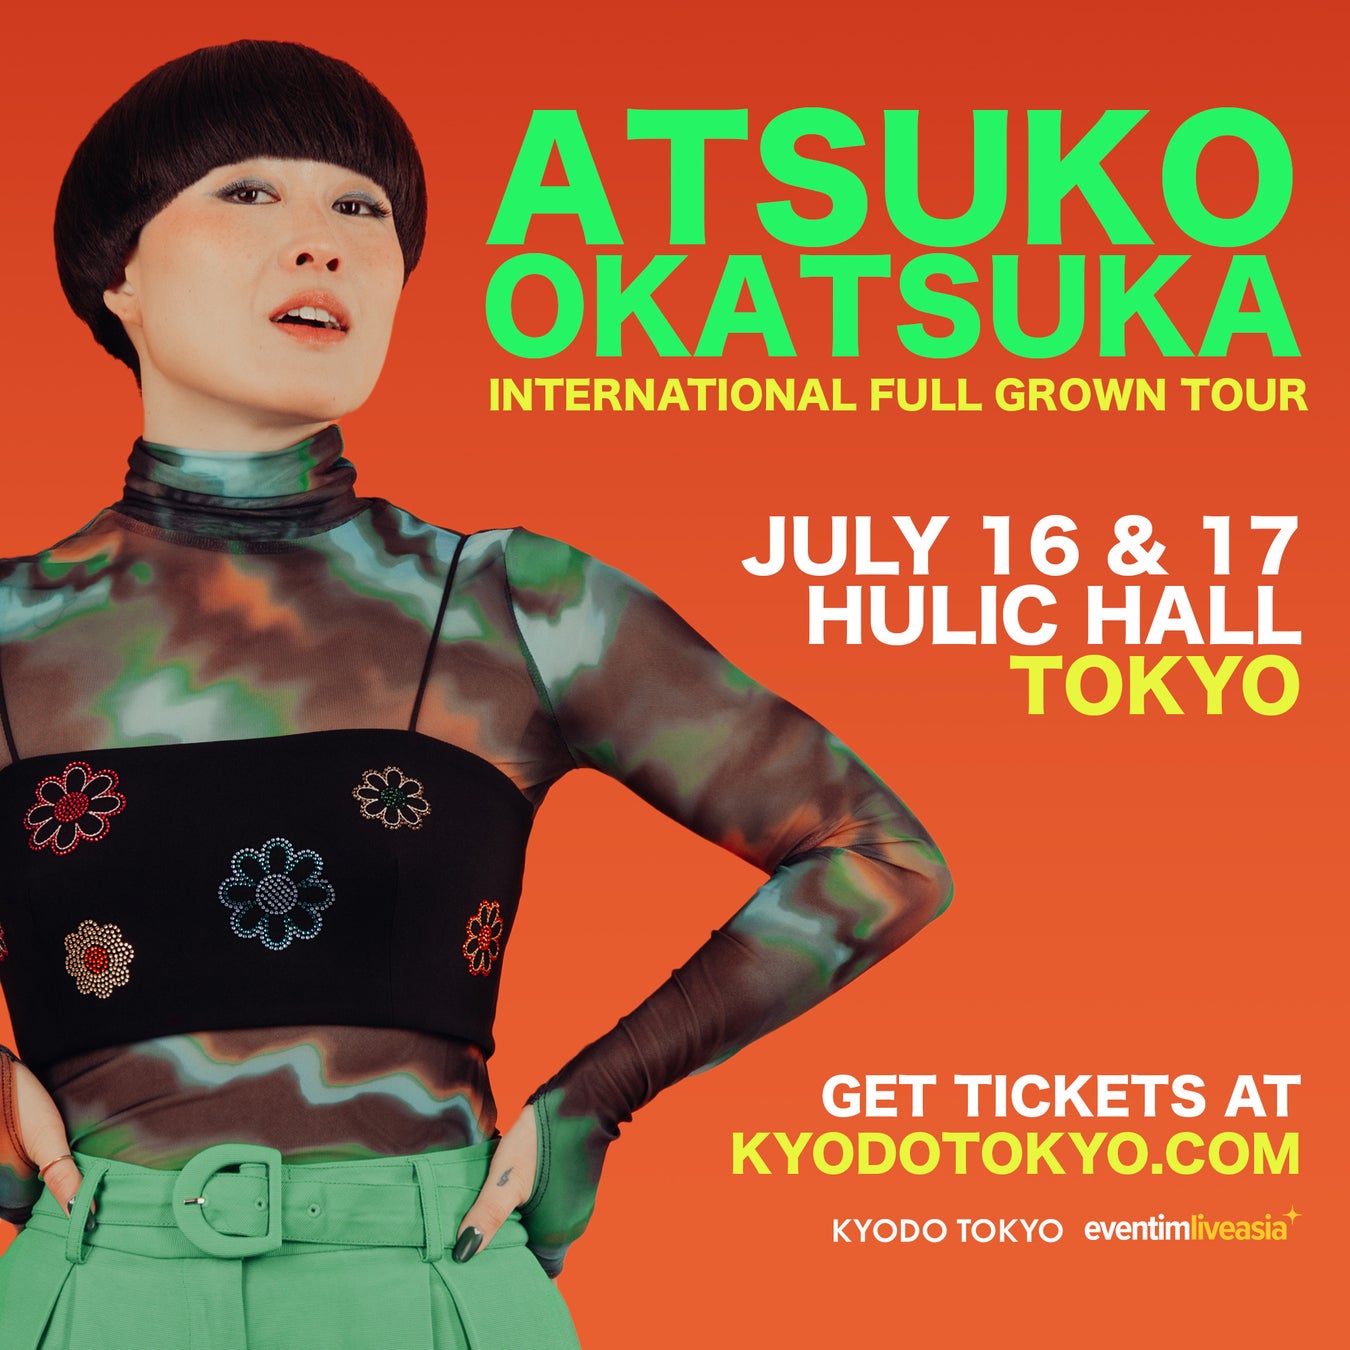 ATSUKO OKATSUKA INTERNATIONAL FULL GROWN TOUR 前回の来日での大反響を受けアンコール公演を開催決定!